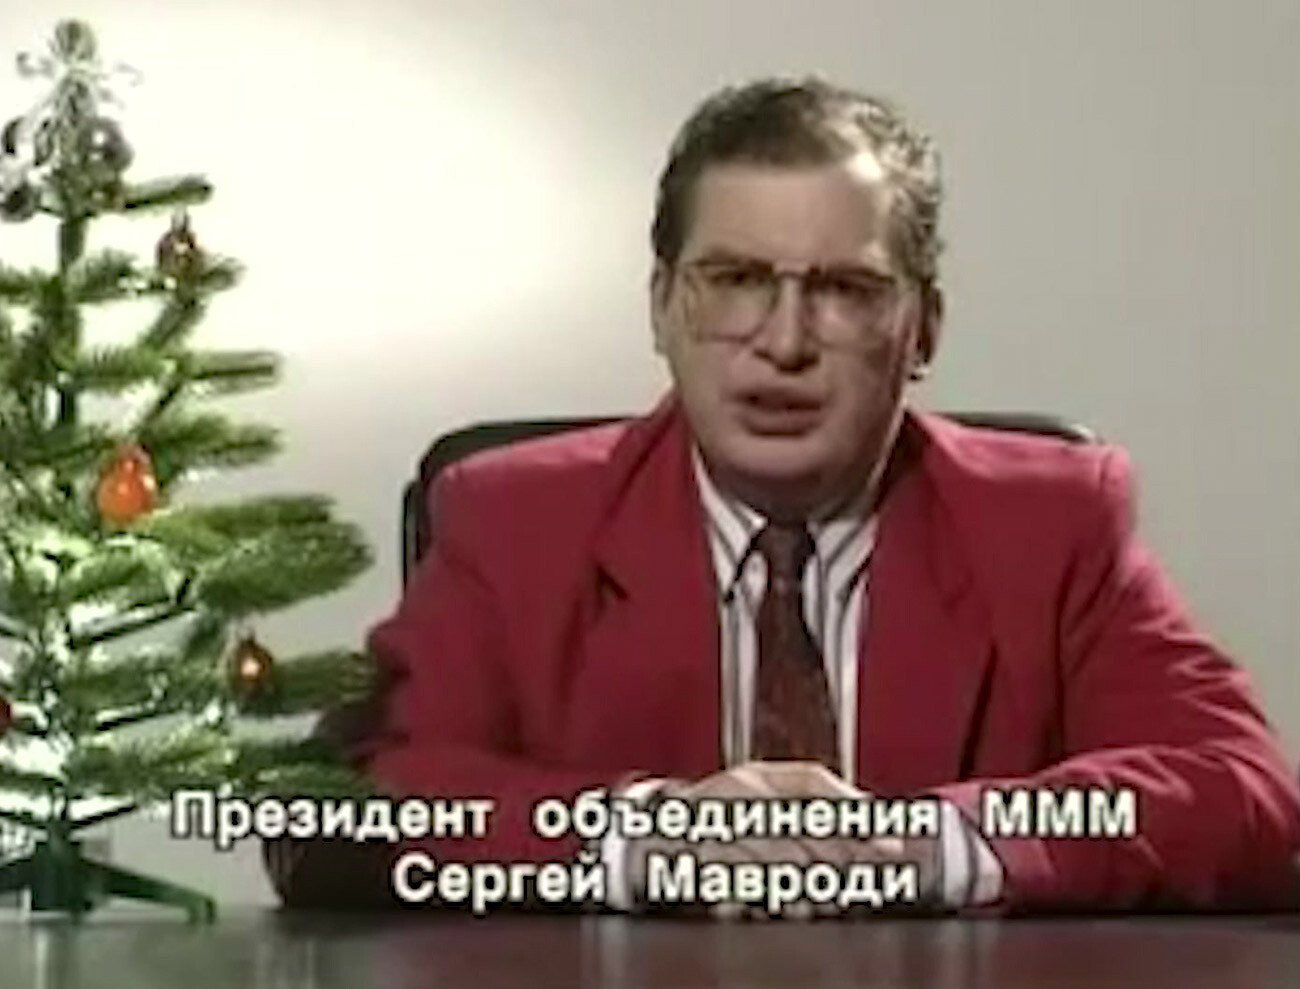 Sergei Mavrodi during a televised address